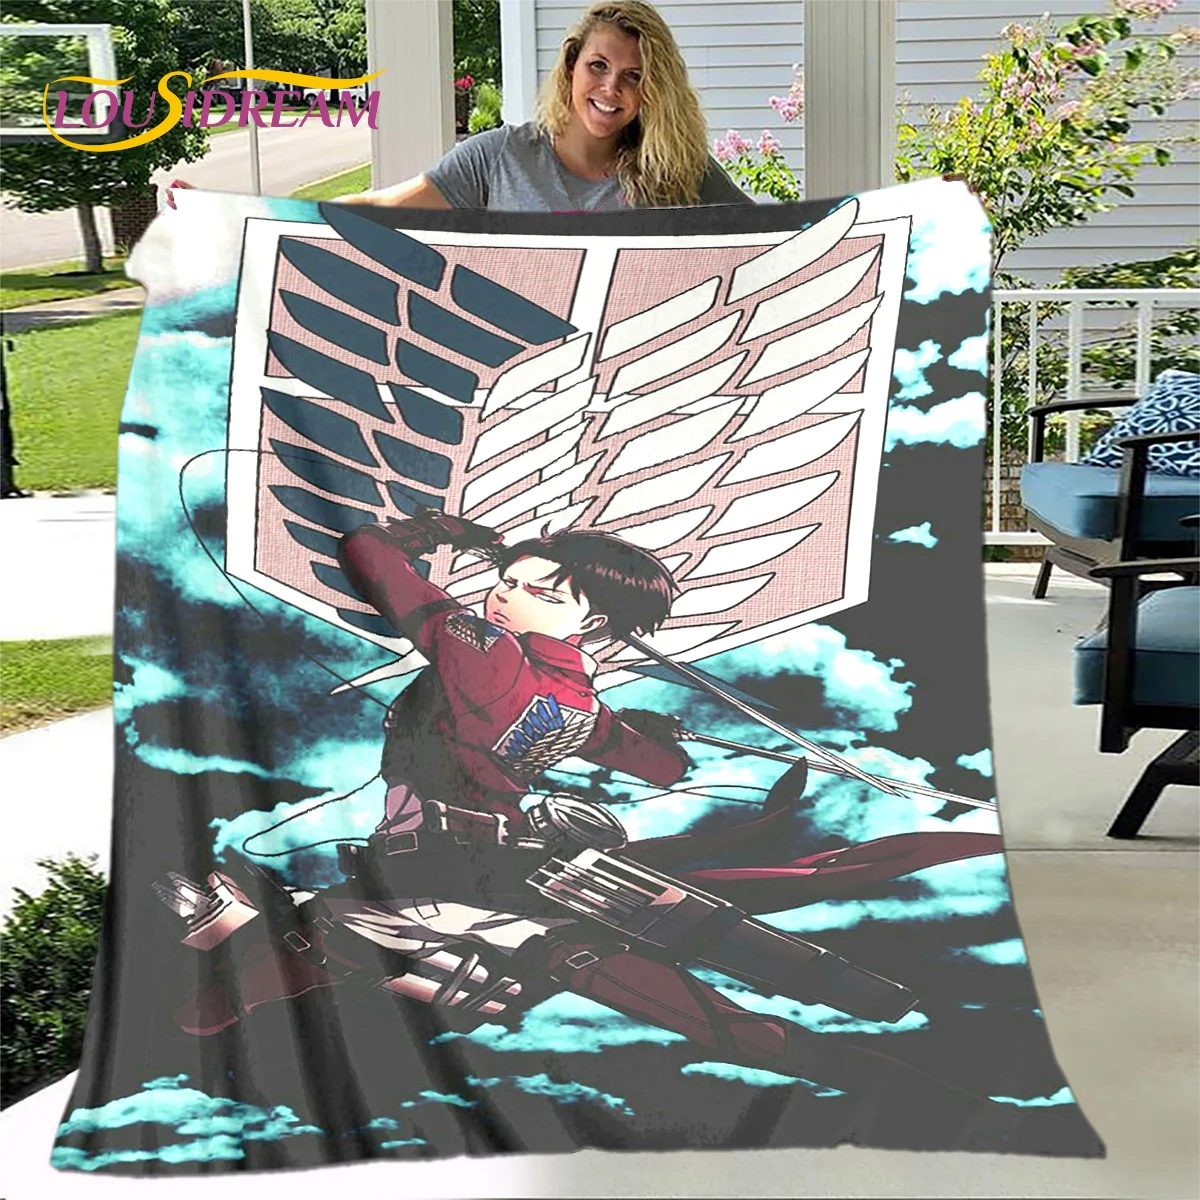 

Cartoon Attack on Titan Blanket,Flannel Blanket Throw Blanket,Sherpa Warm Children's Blanket for Living Room Bedroom Beds Gift